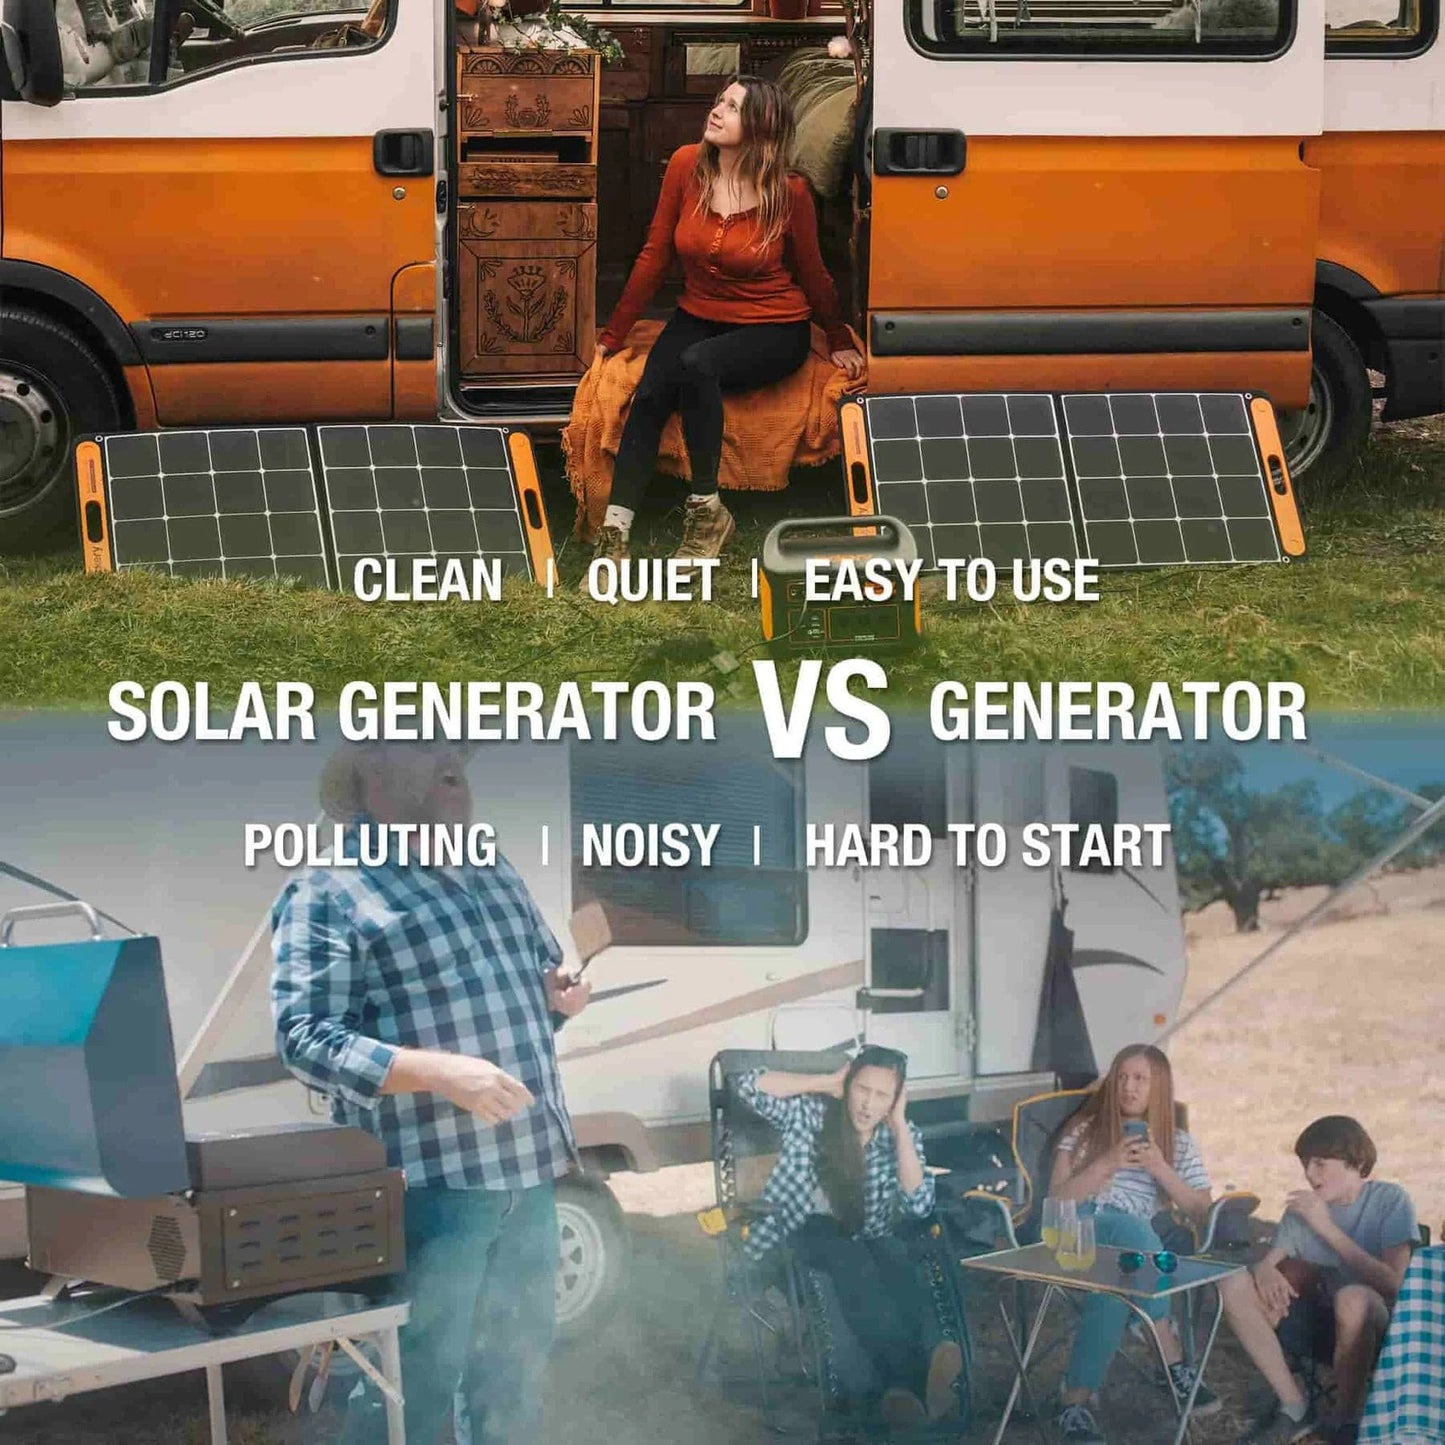 Jackery| Explorer 1000-1002Wh + SolarSaga 100W Panel Solar Generator-EcoPowerit